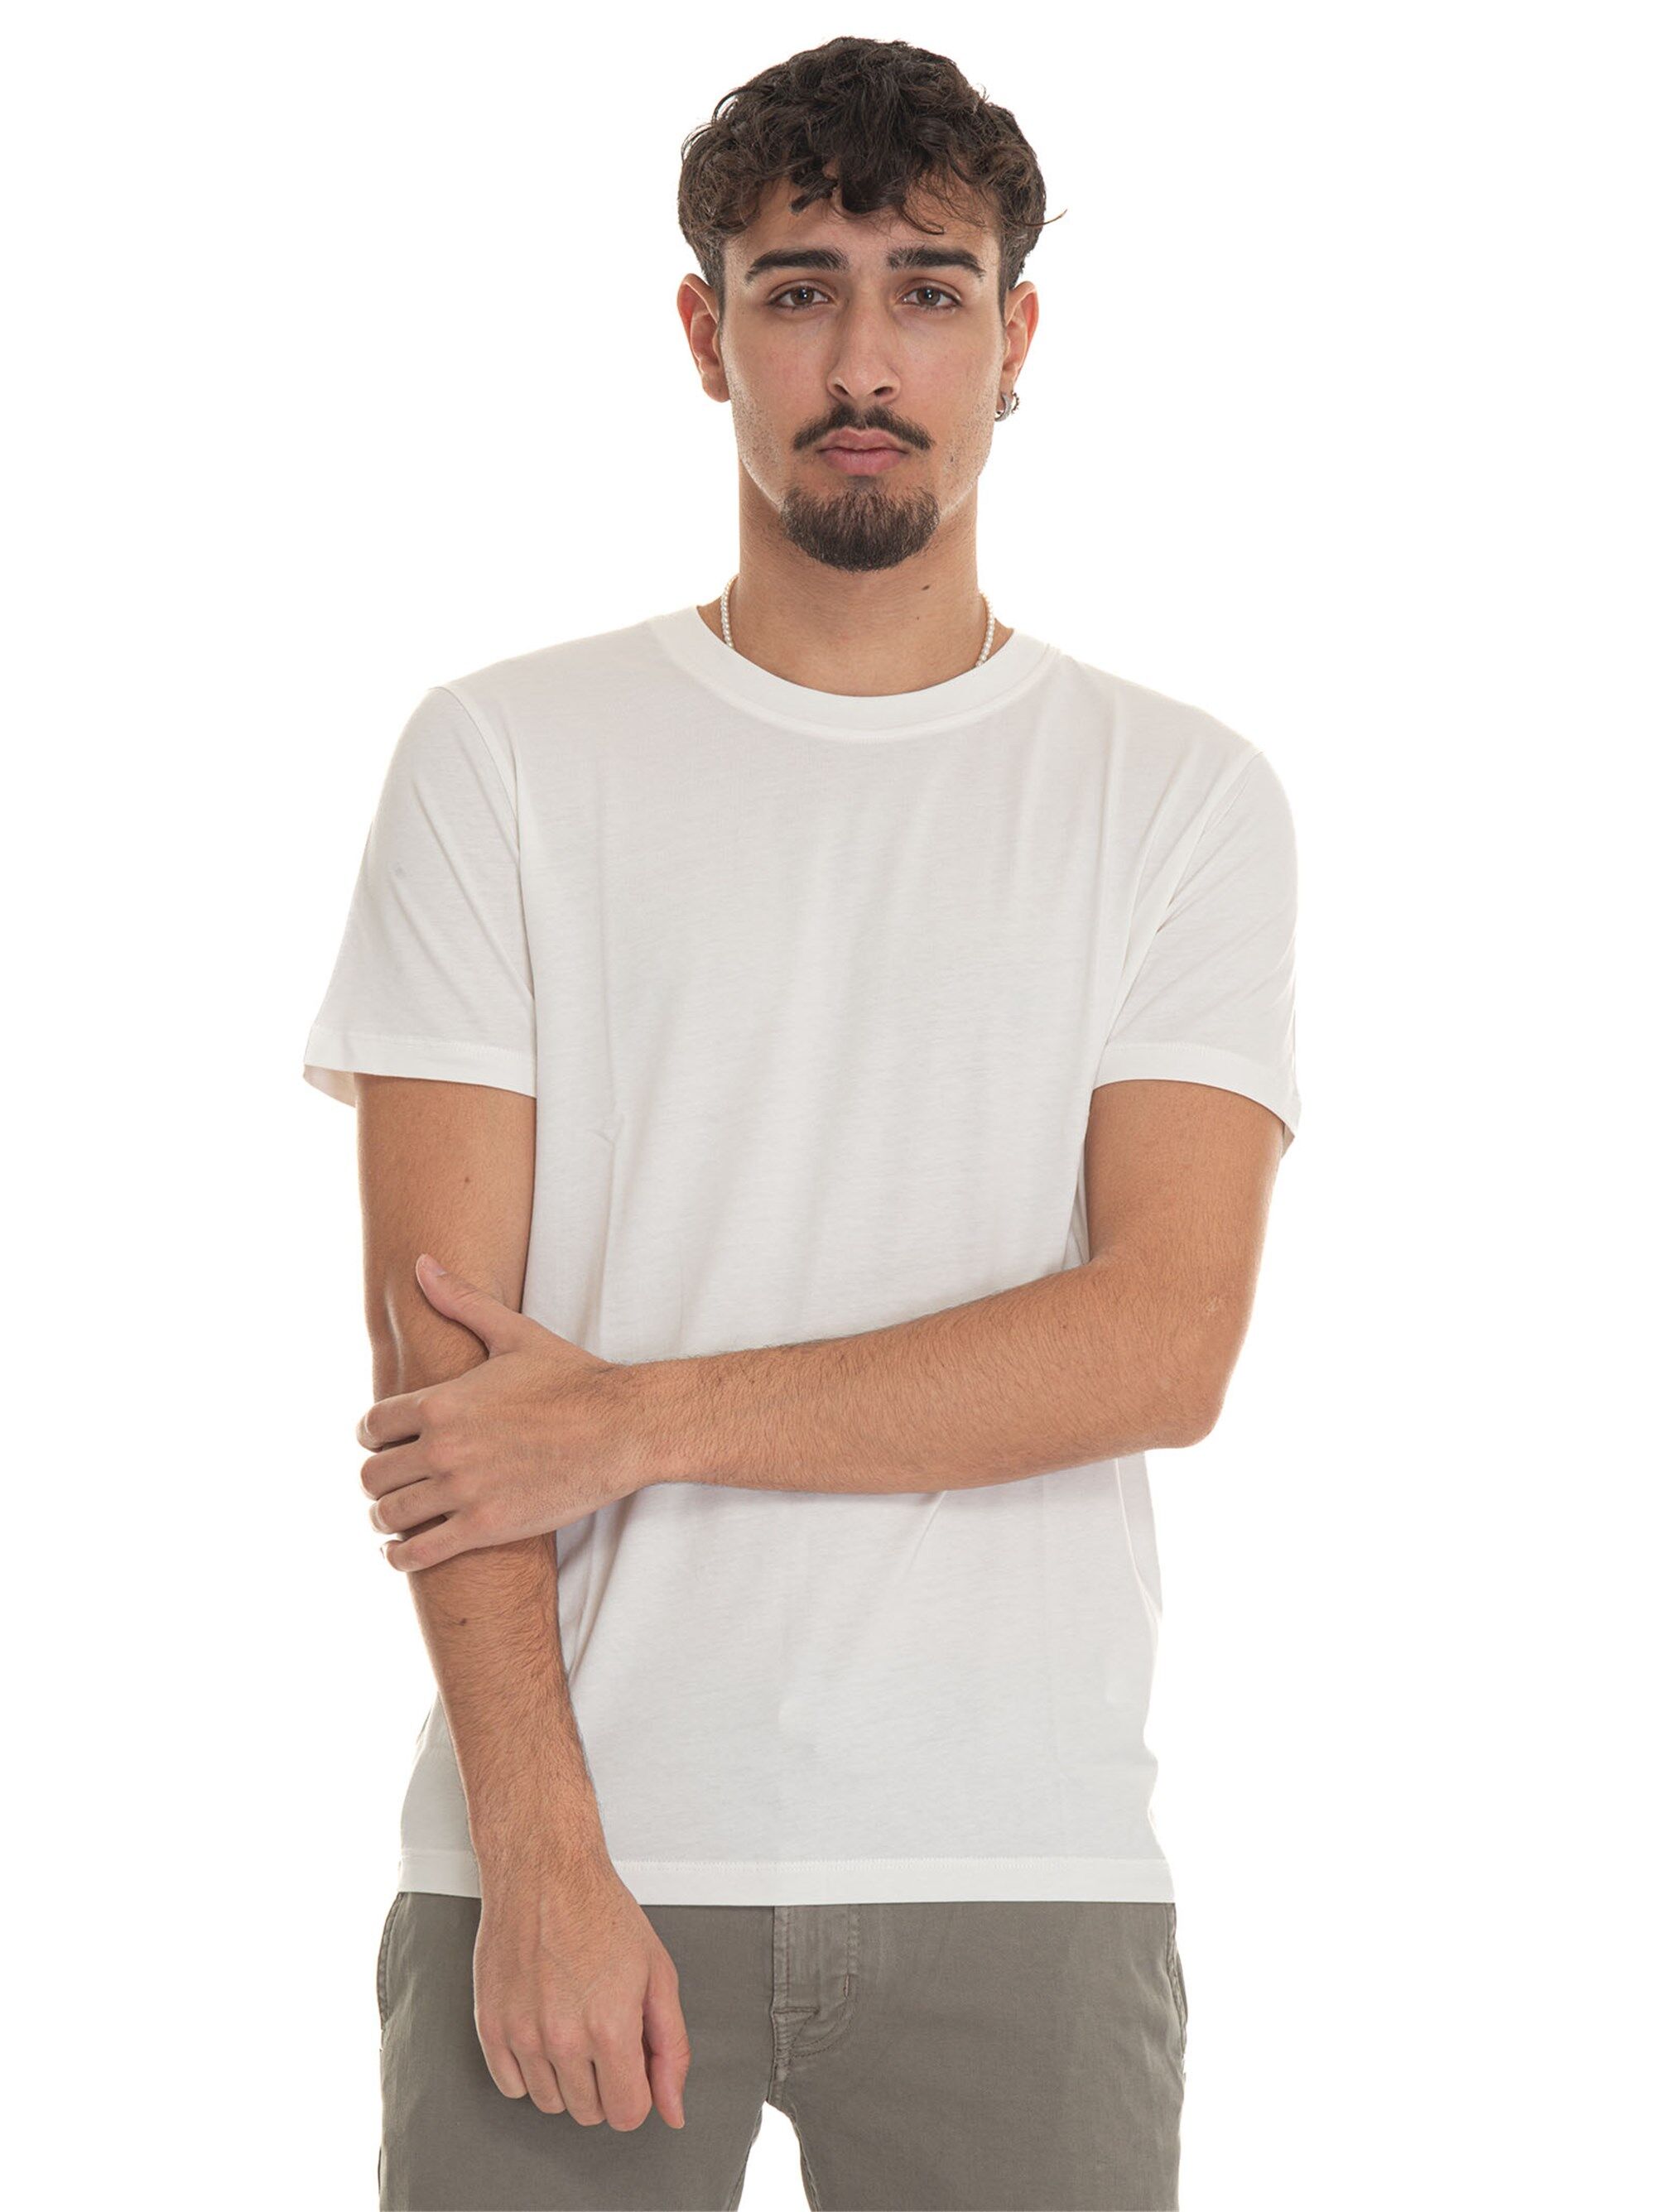 Peuterey T-shirt girocollo mezza manica MANDERLY01 Bianco Uomo XL